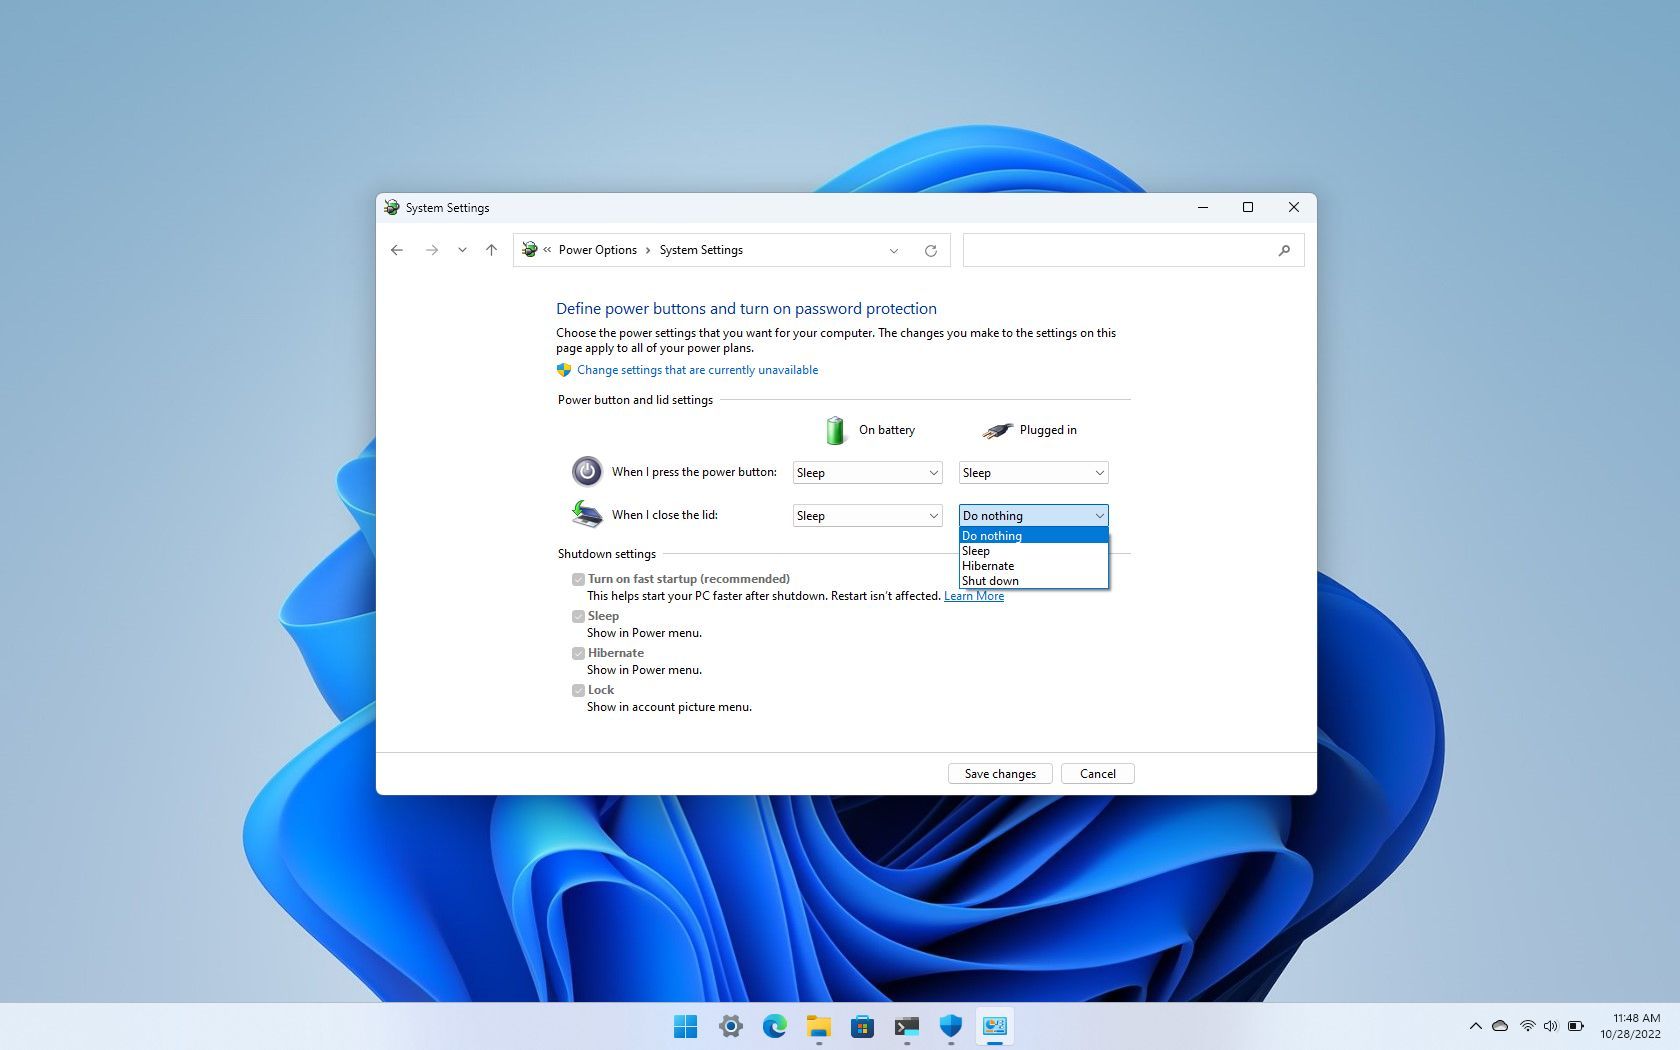 Polar Inițiativă Bufniţă  How to use laptop with external monitor and lid closed on Windows 11 |  Windows Central